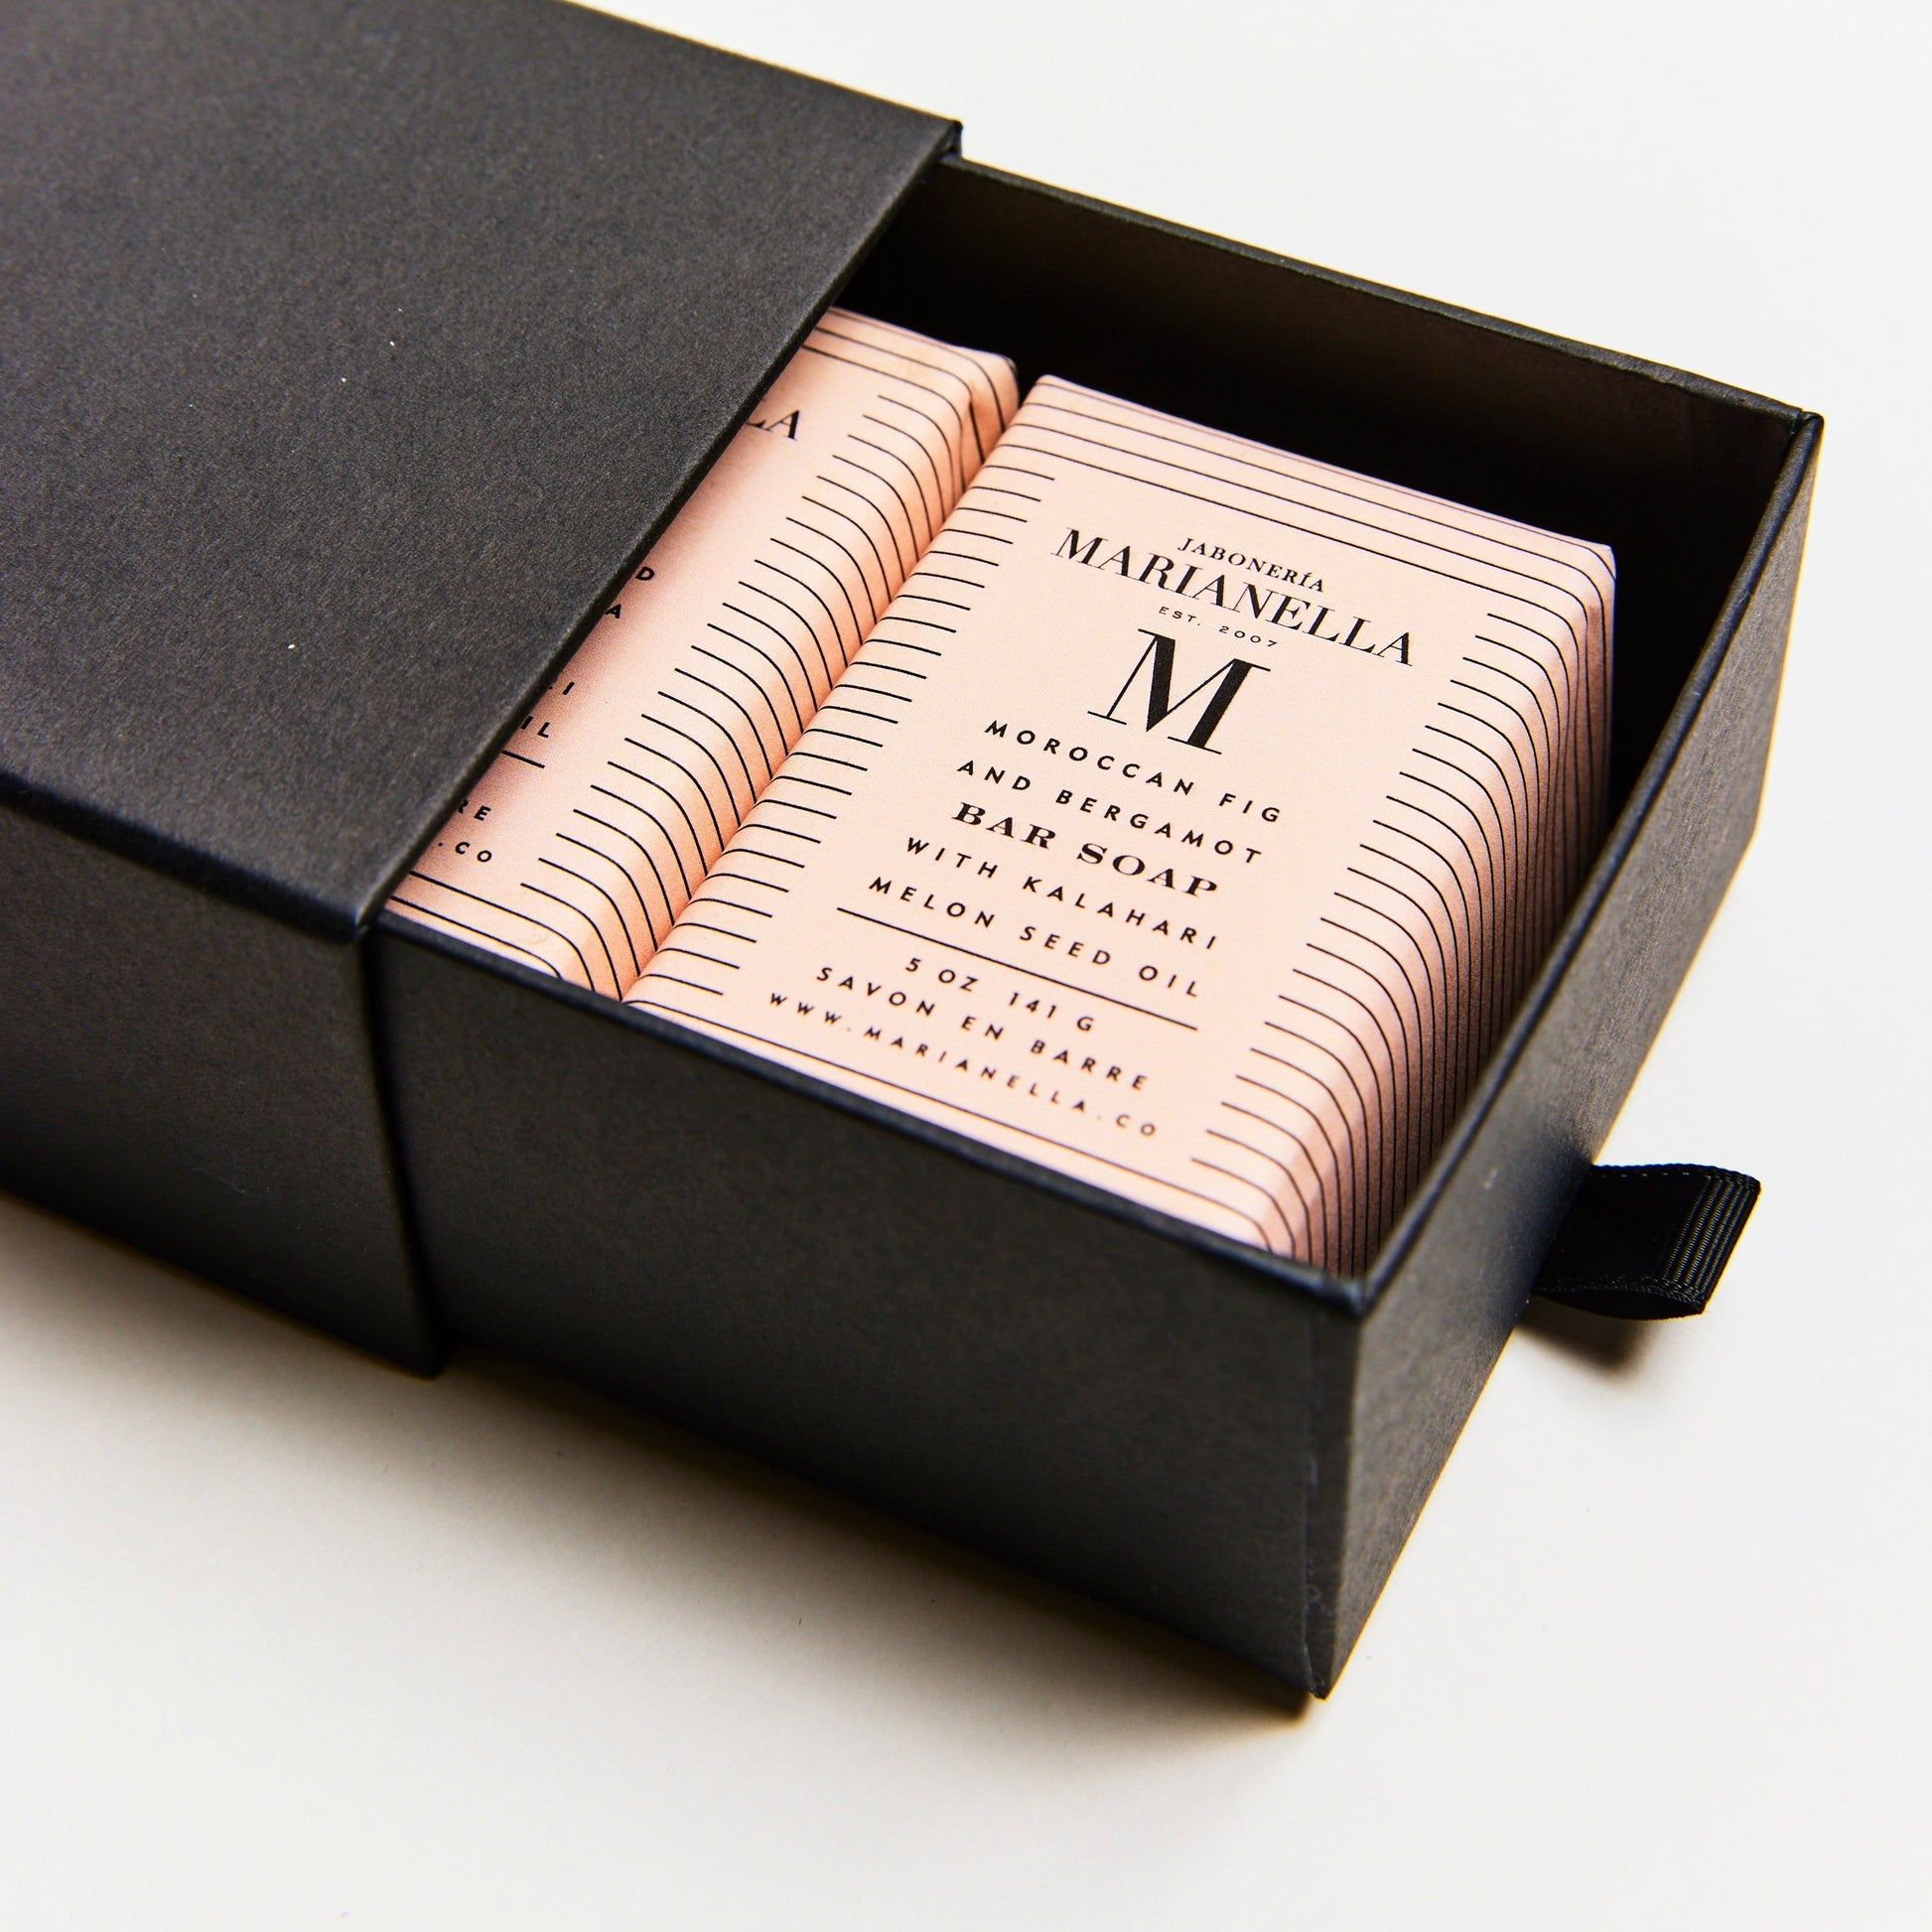 Three Soap Luxury Gift Box – Marianella